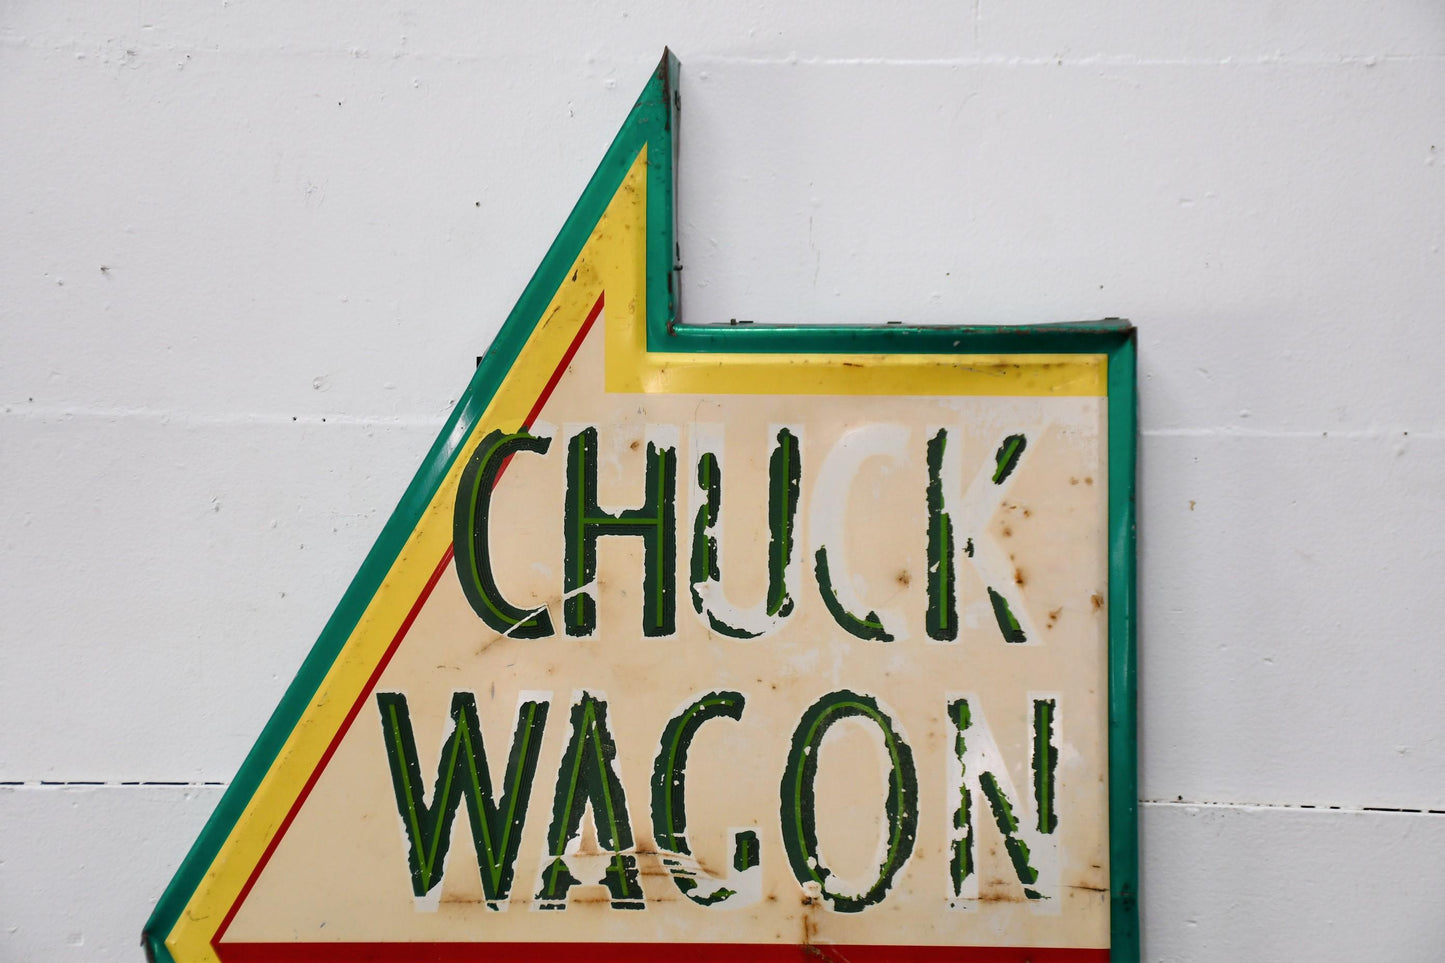 Chuck Wagon Cafe Coca Cola Metal Arrow Sign